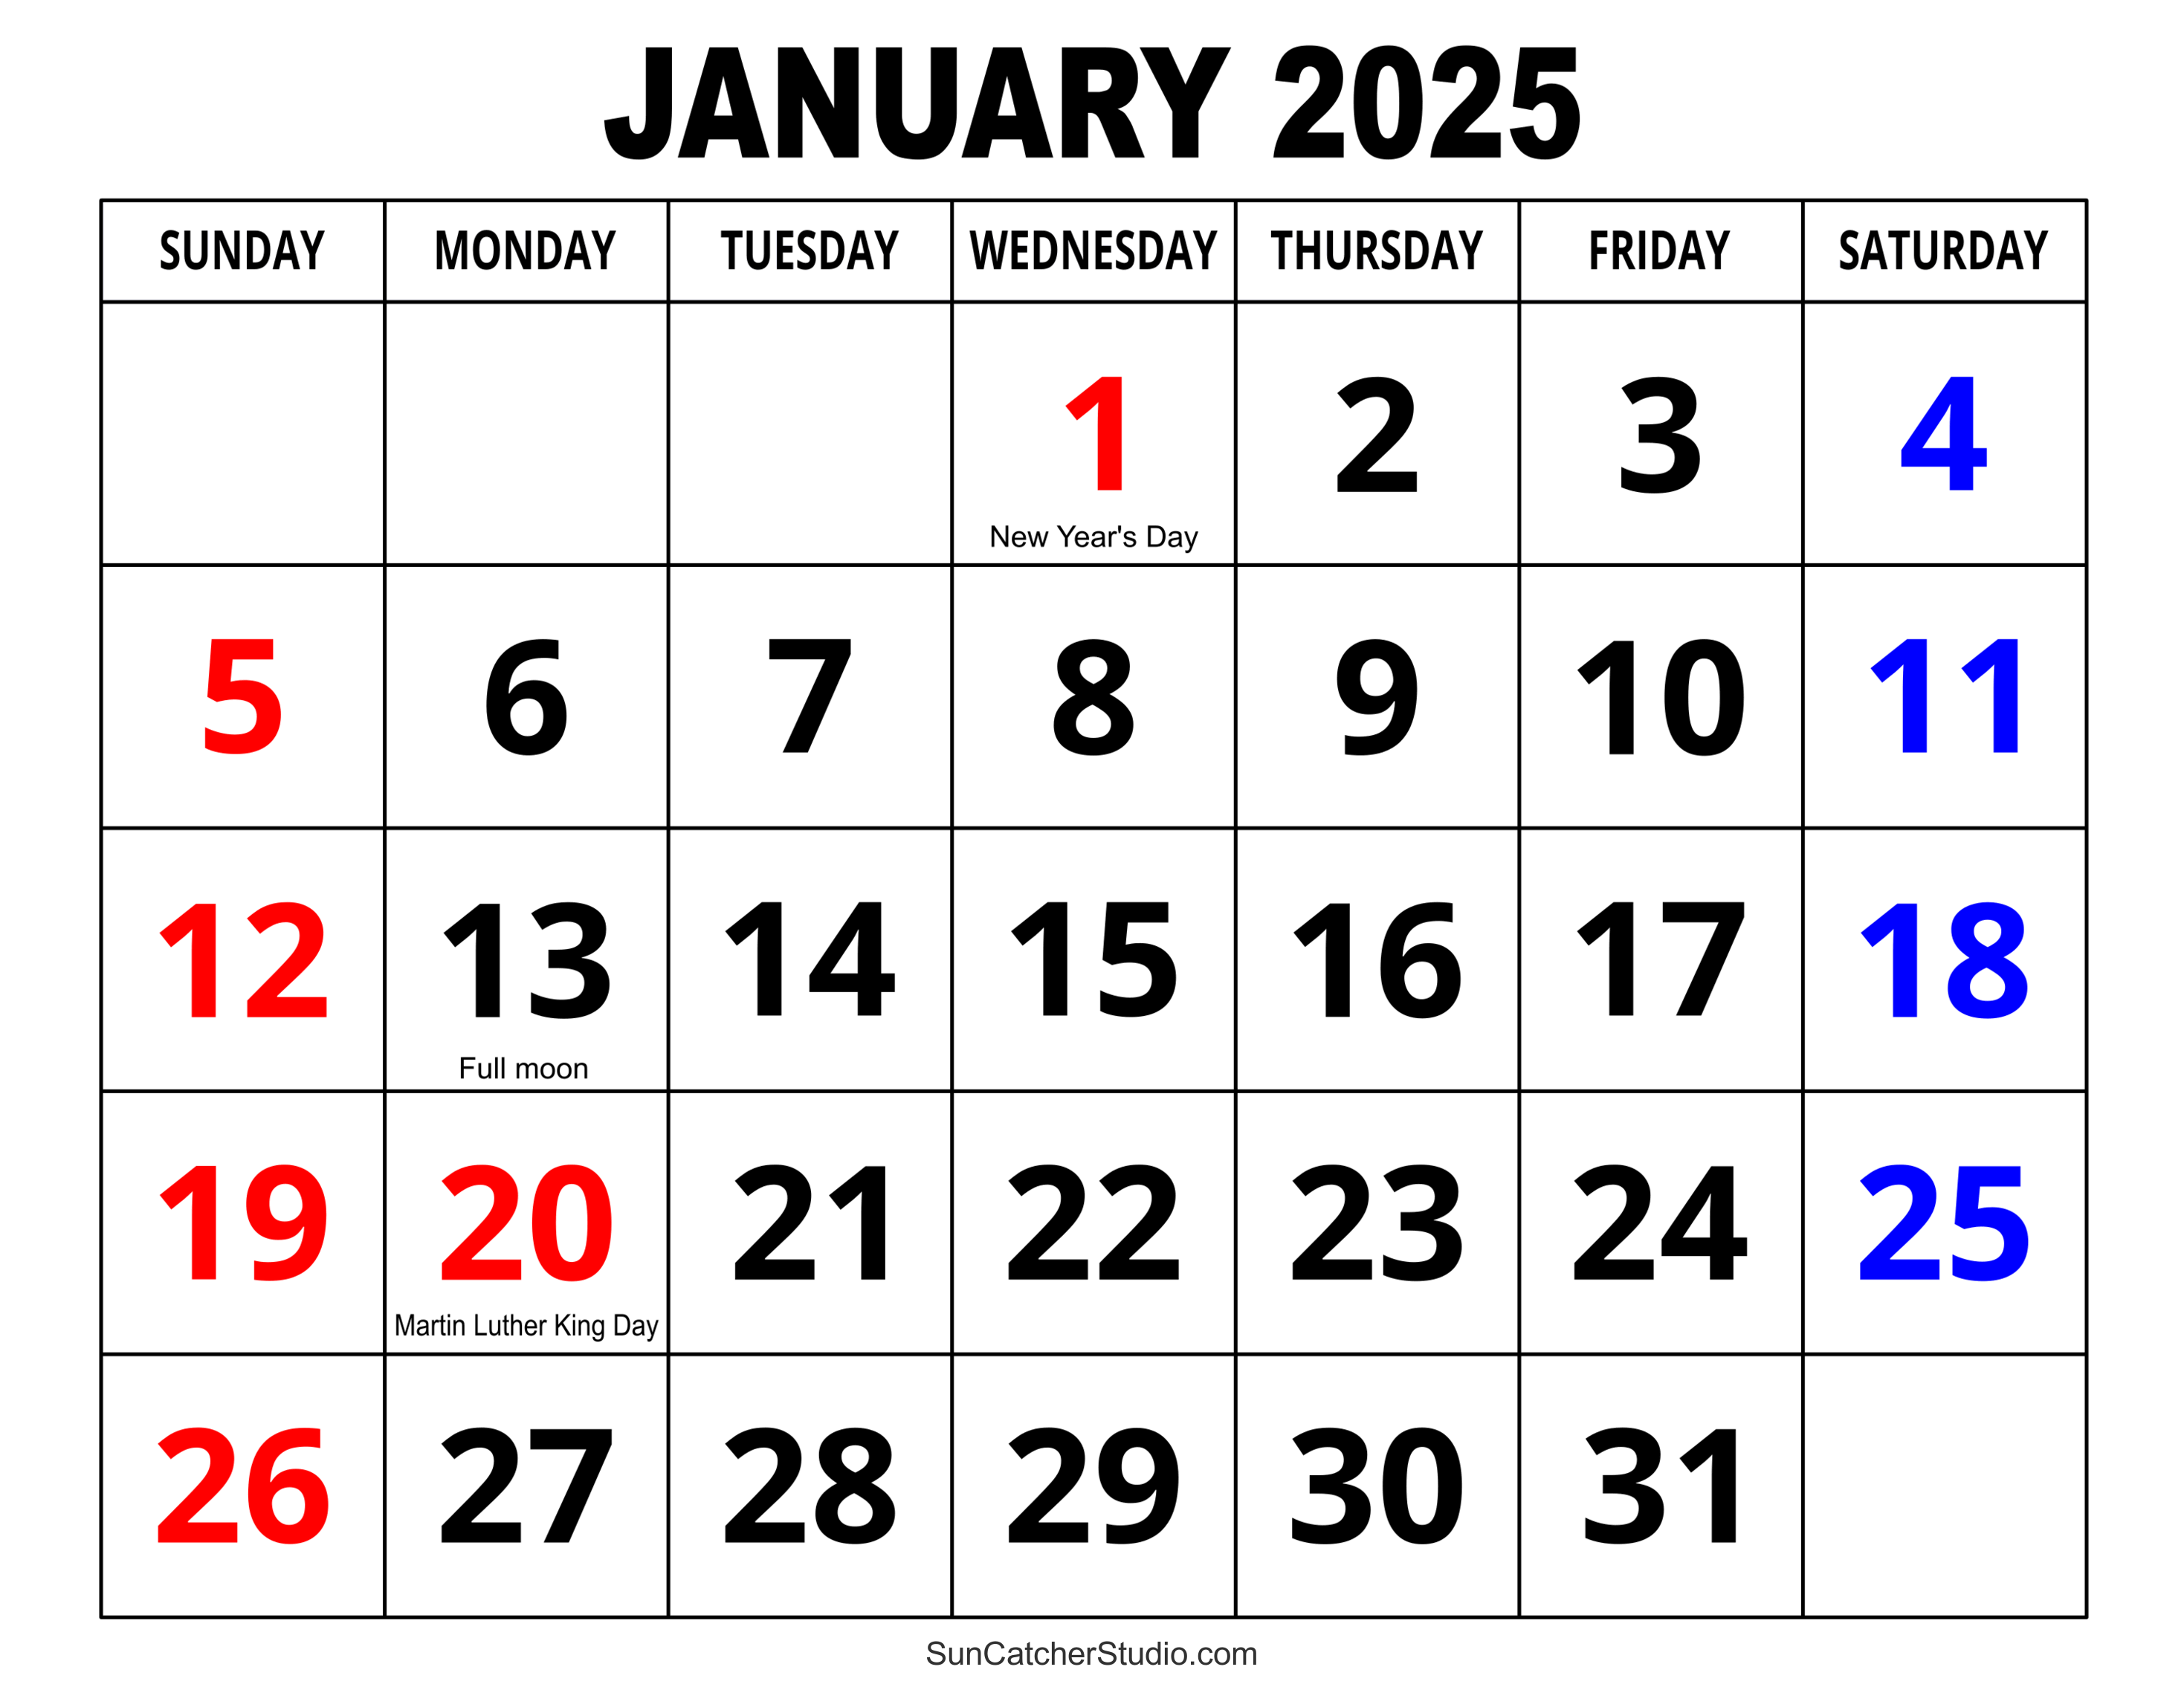 Jan 2025 Calendar To Print At Home selma olympia